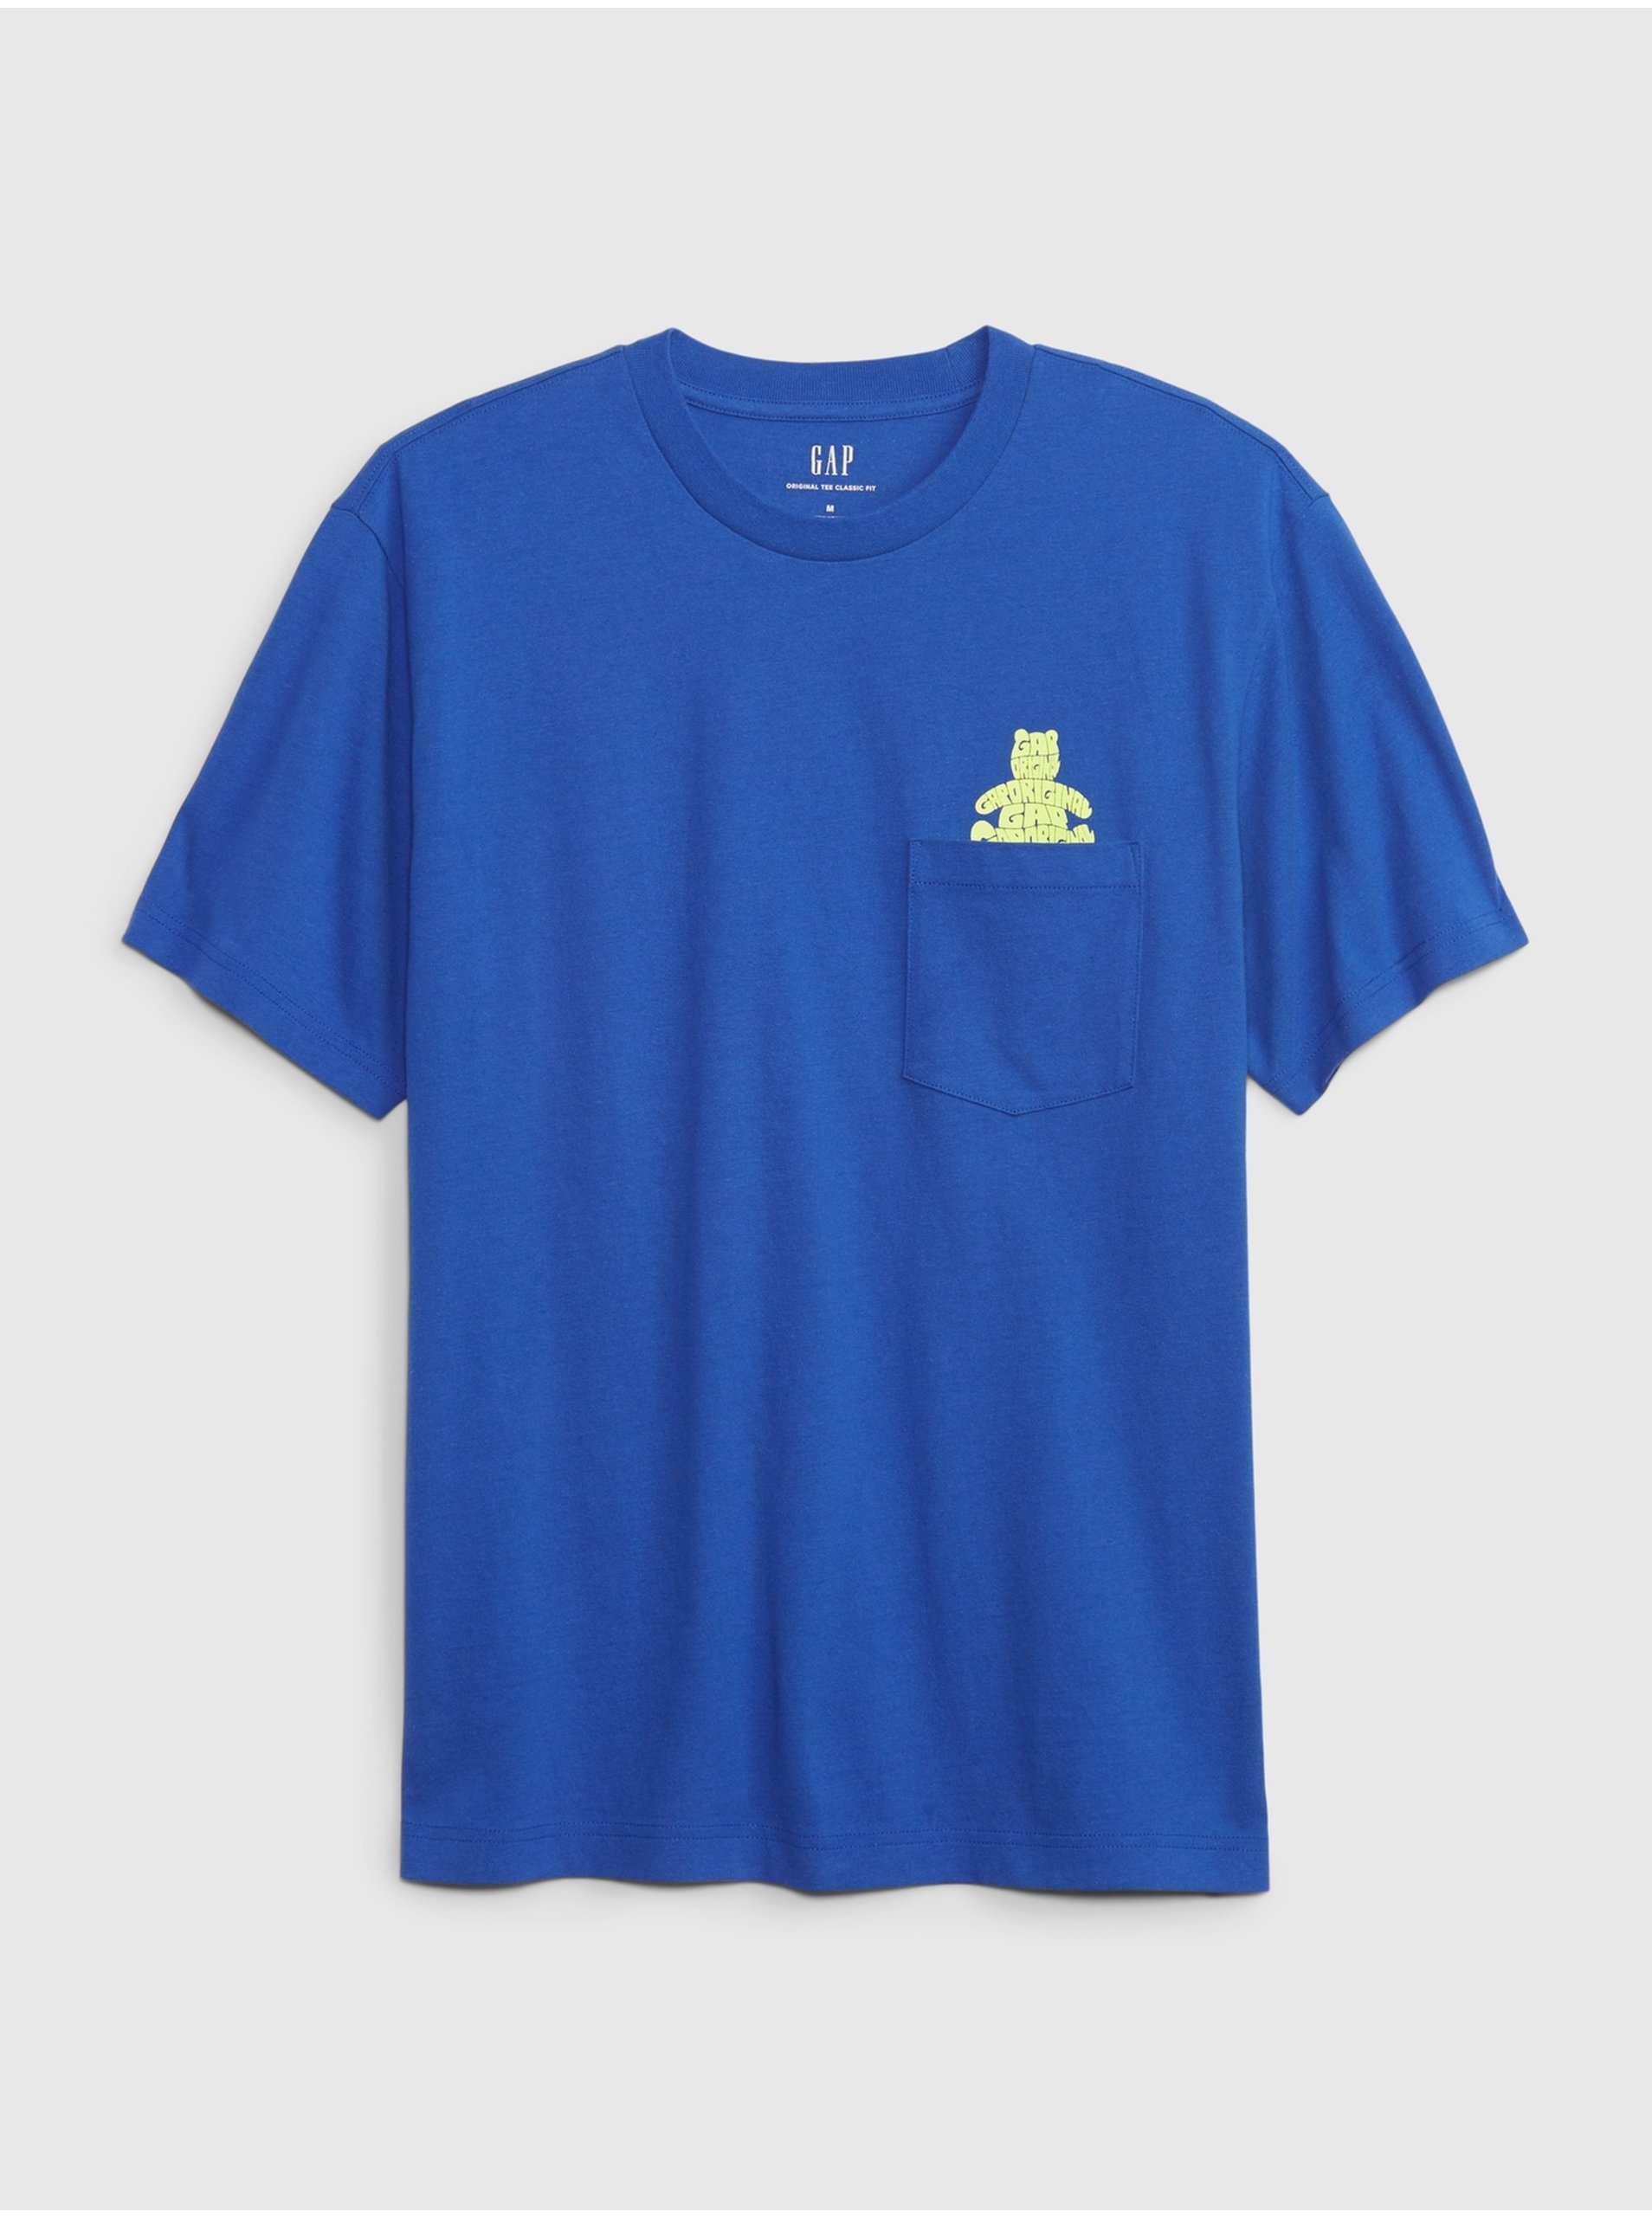 E-shop Modré unisex tričko s potiskem GAP